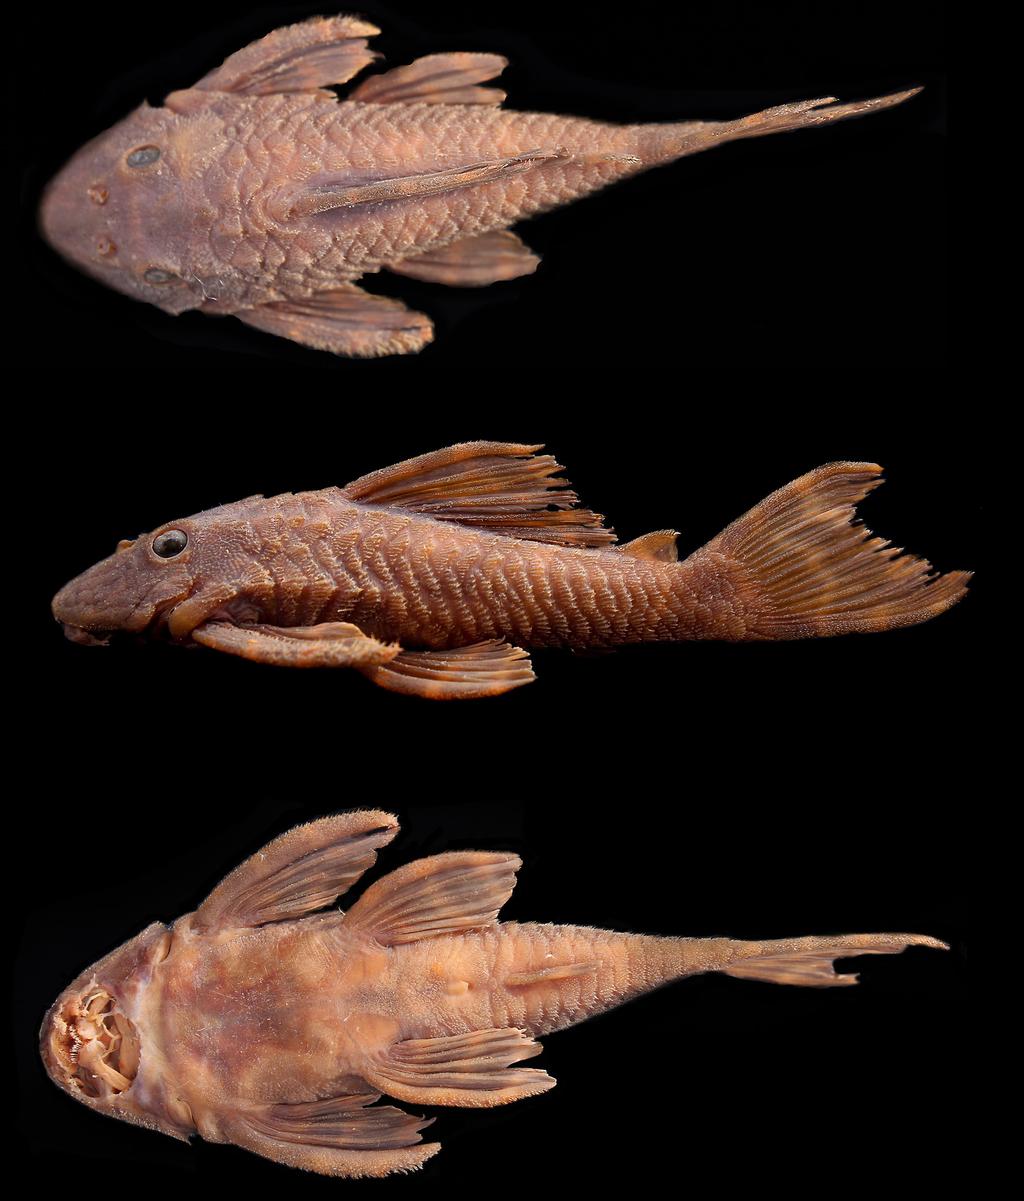 Boletín del Museo nacional de Historia Natural del Paraguay Vol. 17, Nº 1 (Agosto 2013) 69 Figure 1. Dorsal, lateral, and ventral view of the specimen of Hypostomus peckoltoides, MNHNP 2905, 120.